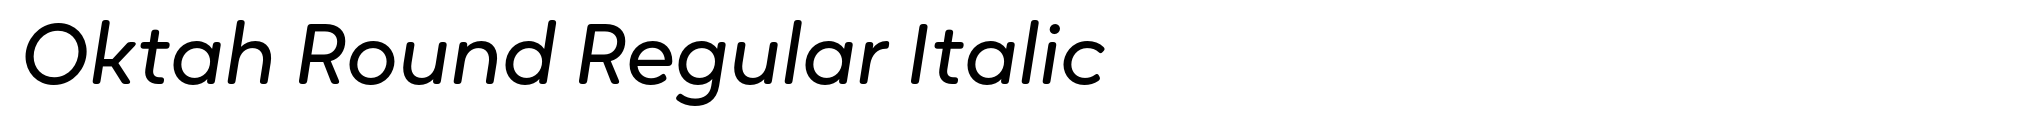 Oktah Round Regular Italic image